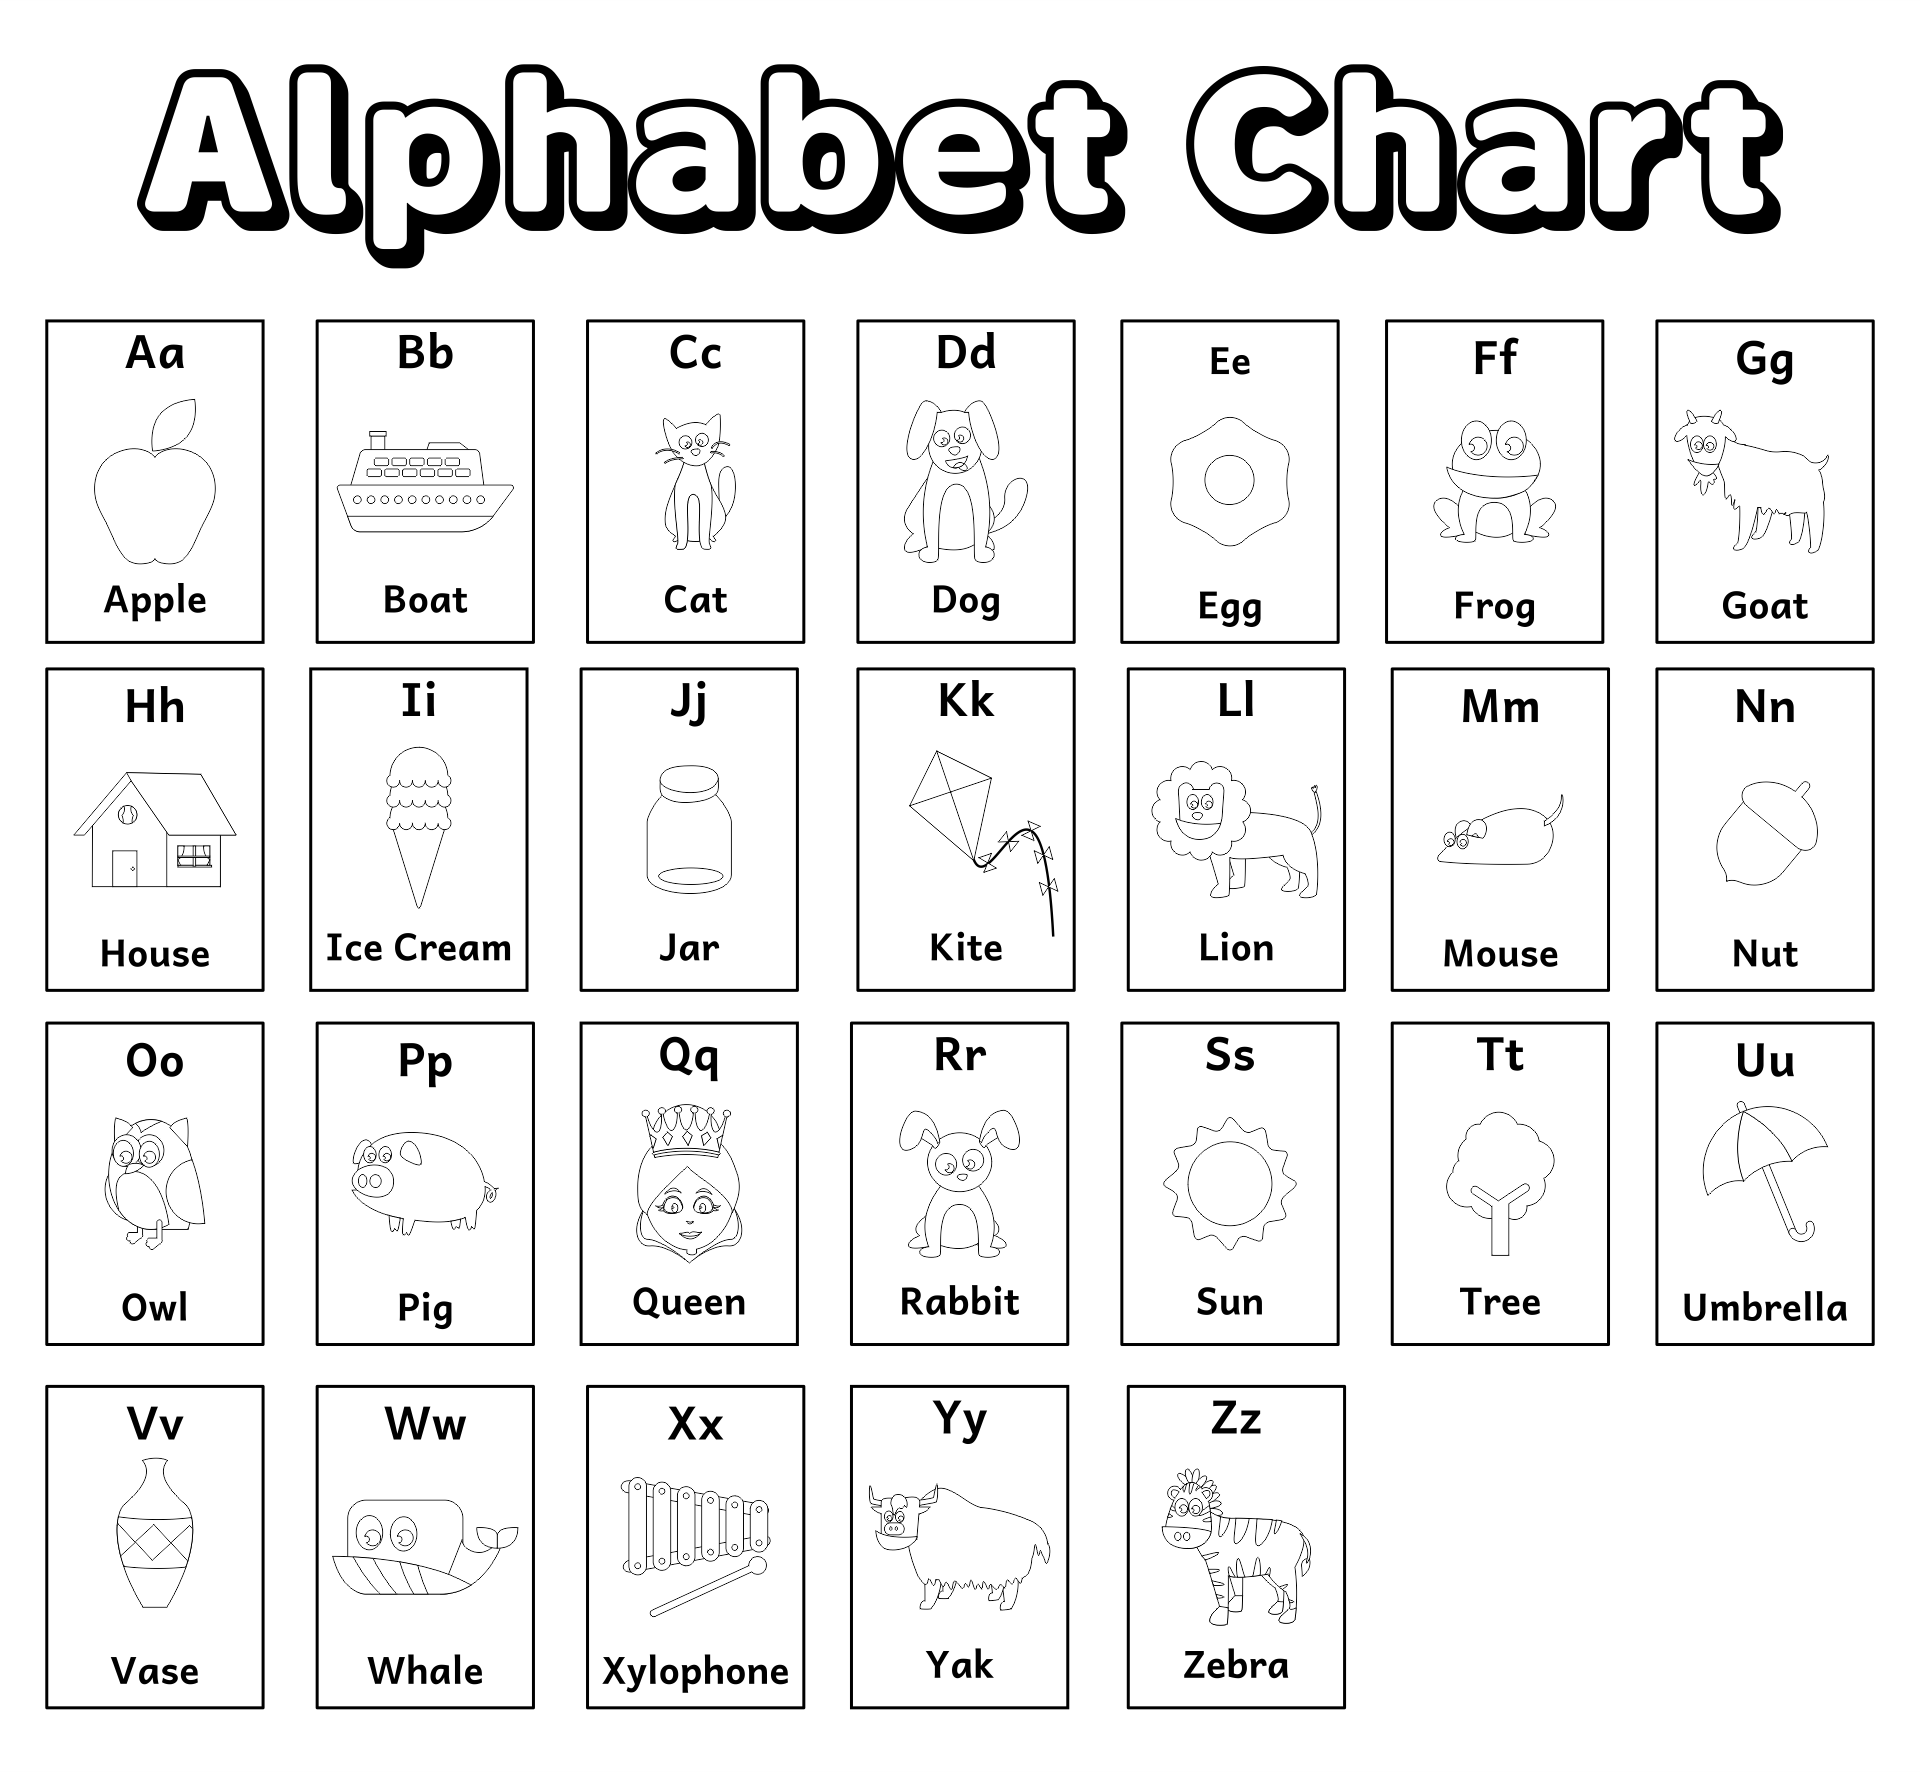 black-and-white-alphabet-chart-printable-alphabet-chart-printable-alphabet-charts-alphabet